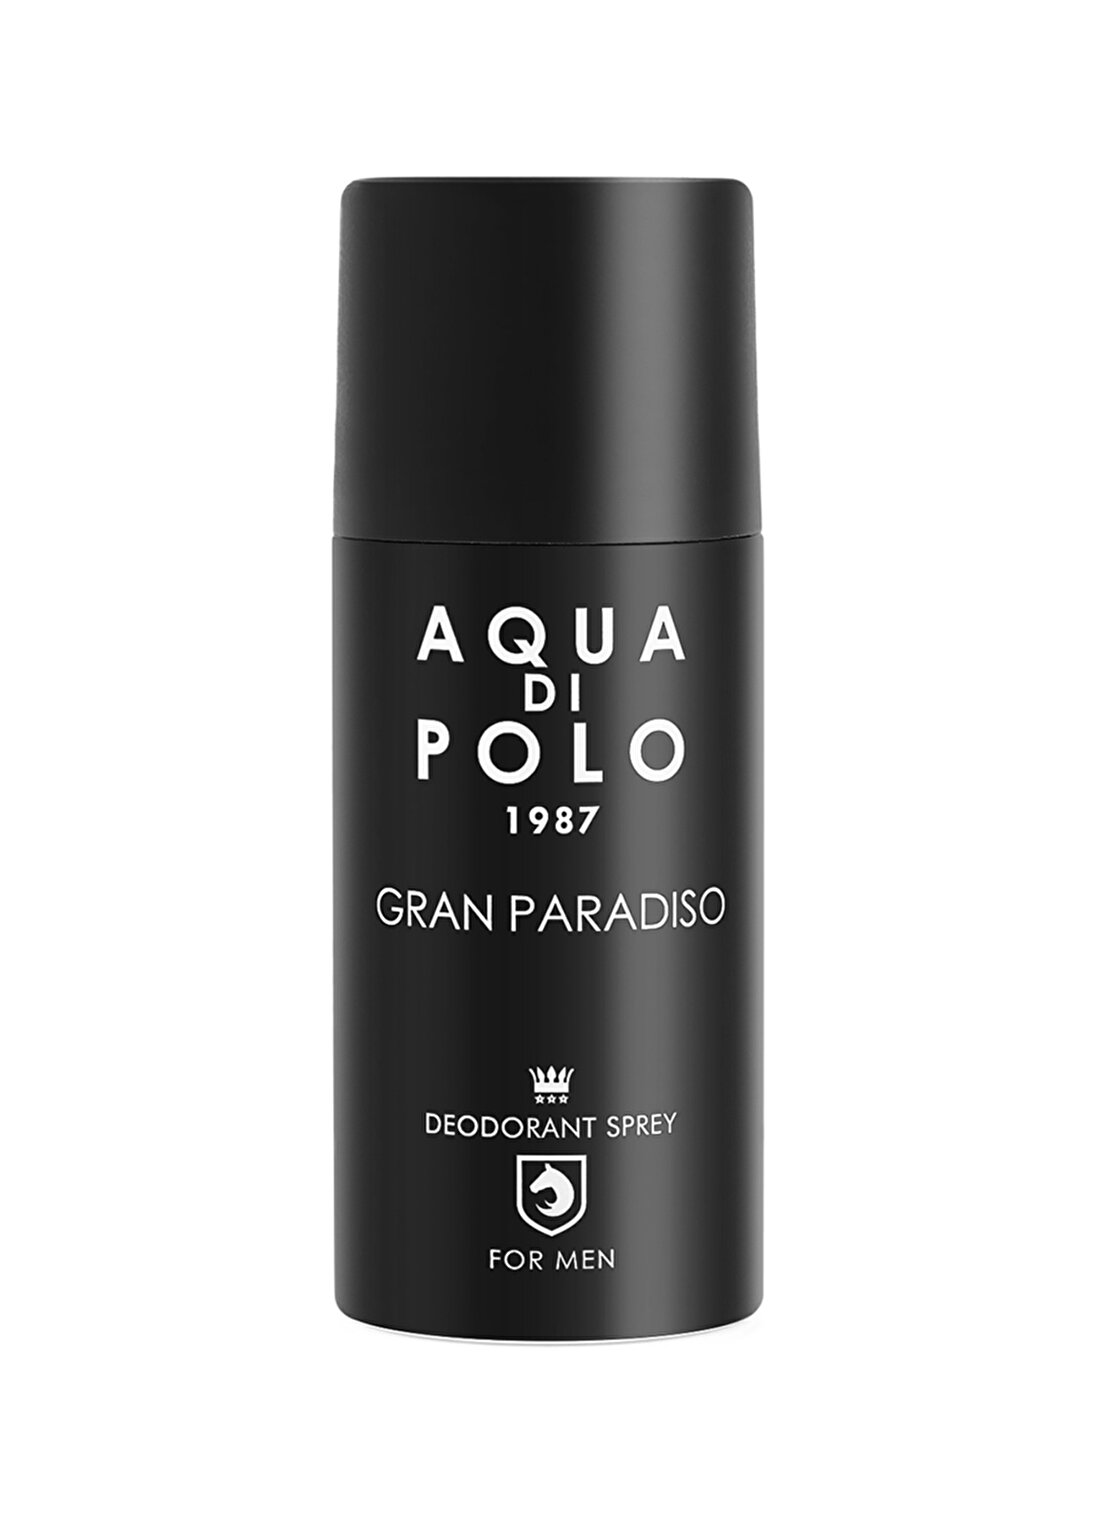 Aqua Di Polo 1987 Deodorant